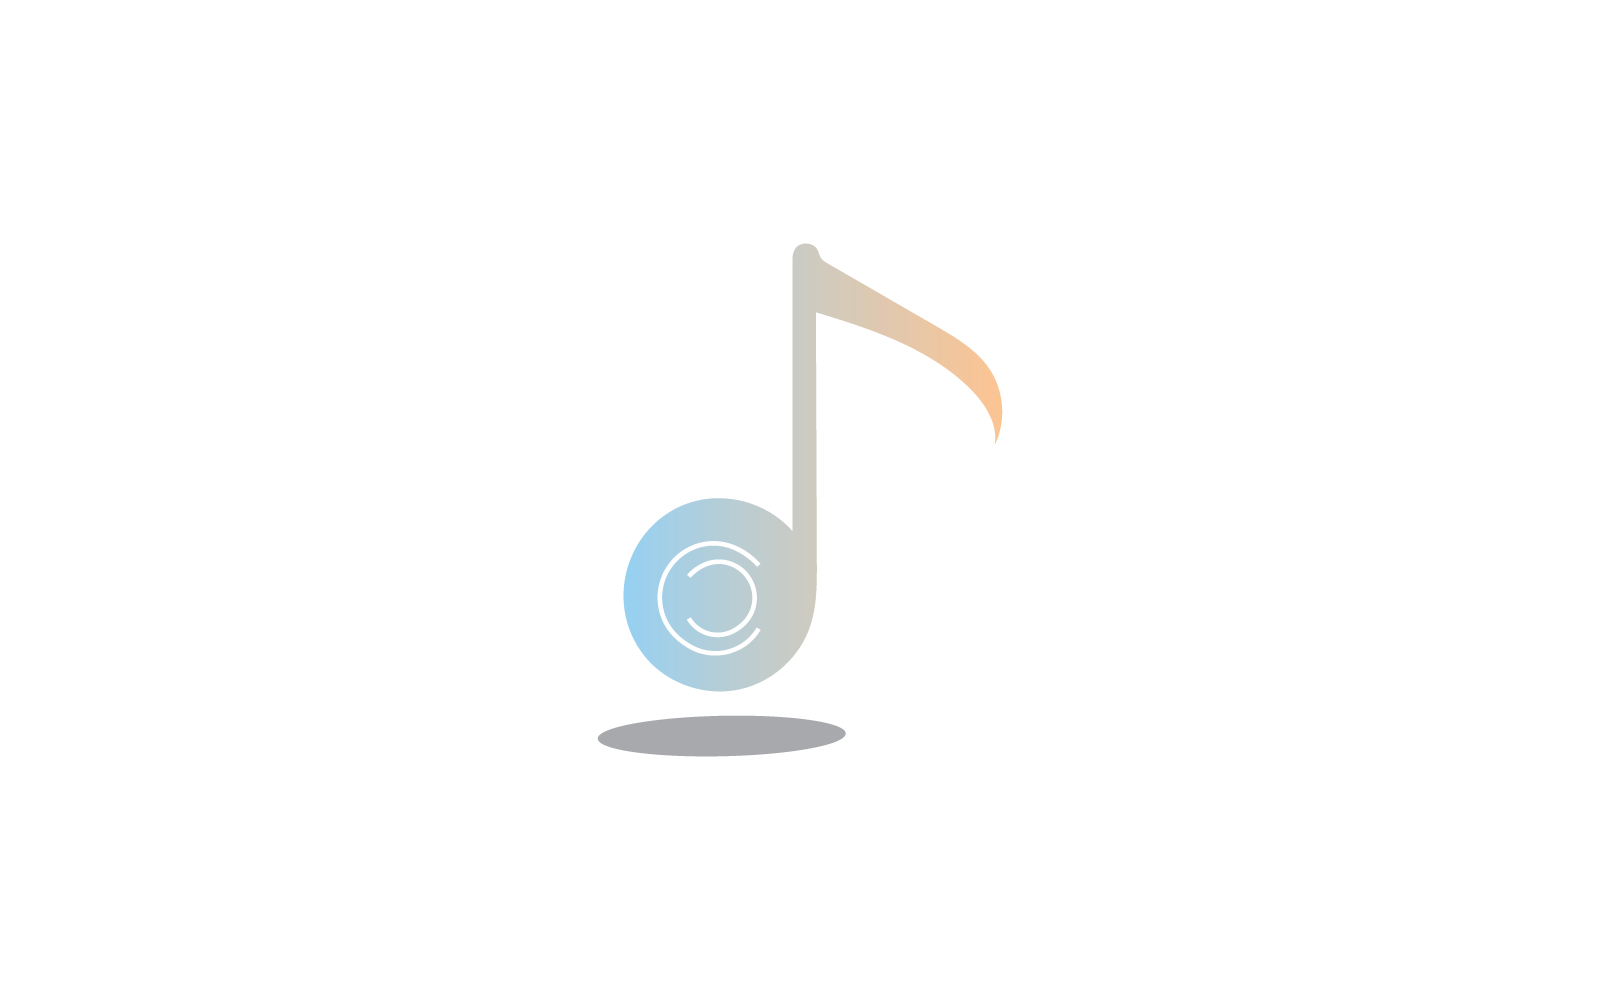 Music logo and symbol flat design template